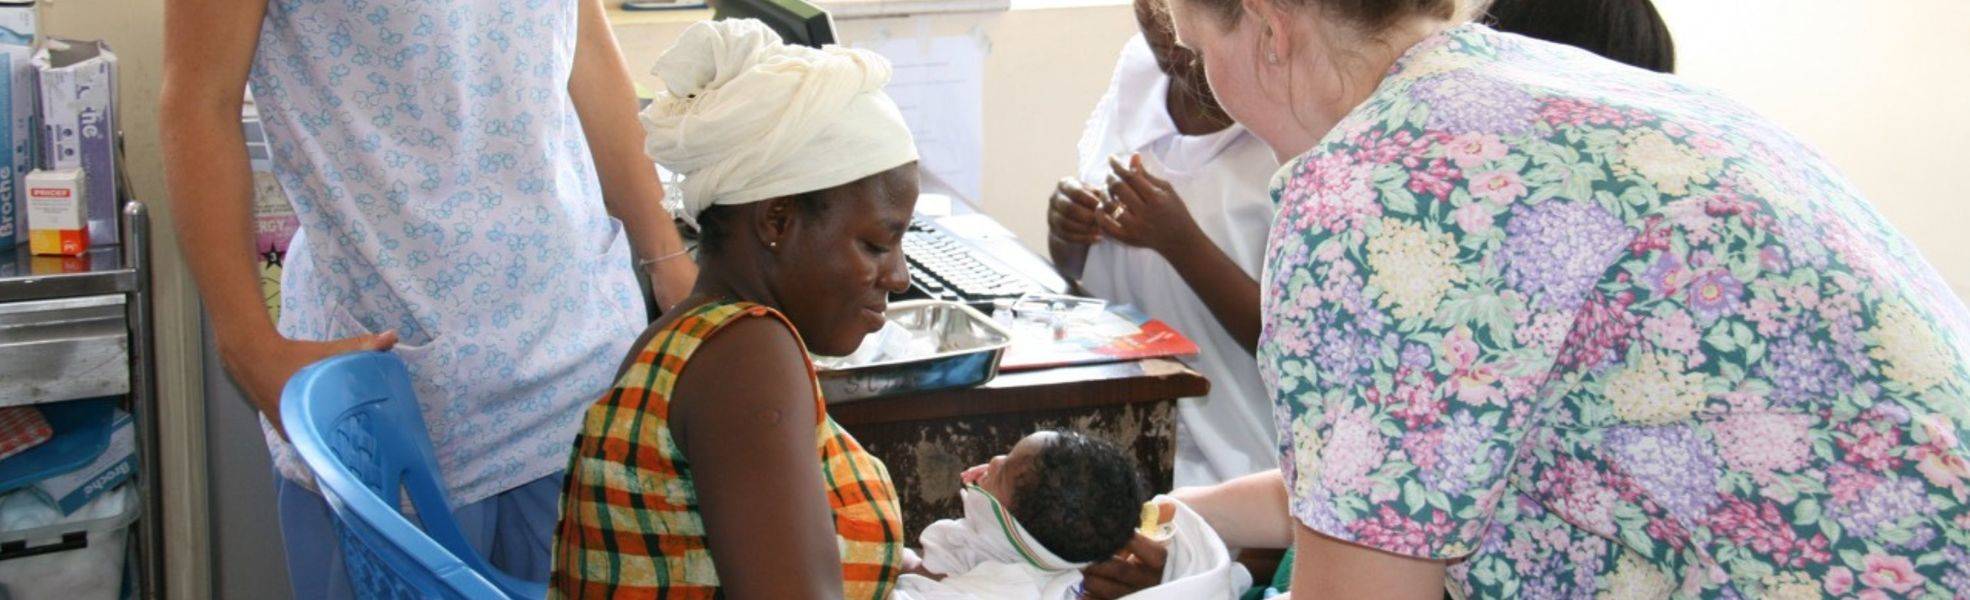 Volunteer on her medical internship abroad in Ghana